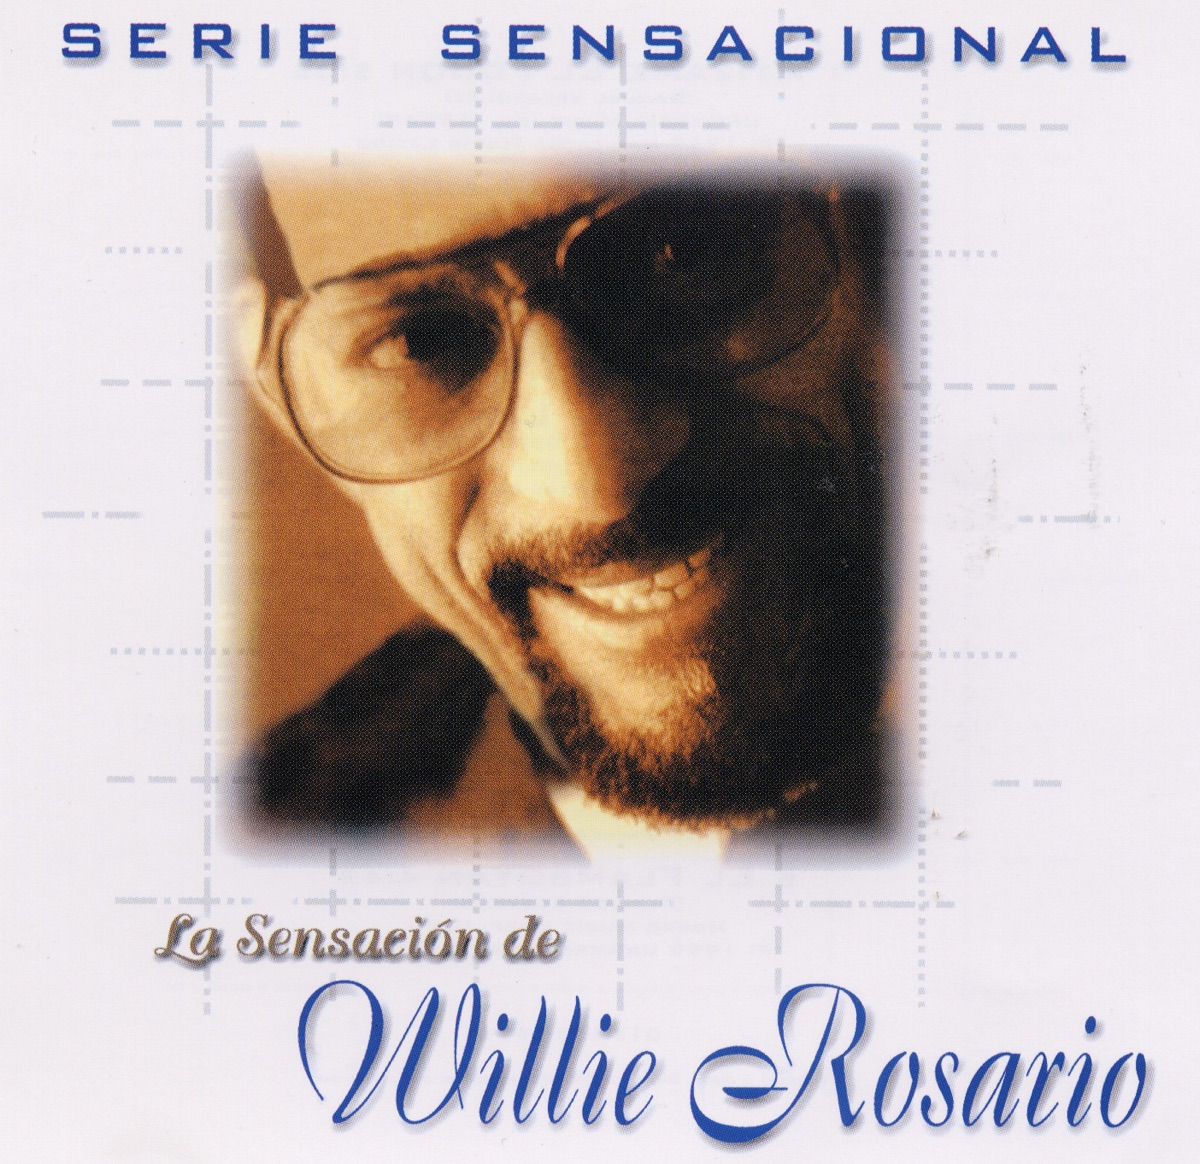 Nueva Cosecha by Willie Rosario on Apple Music